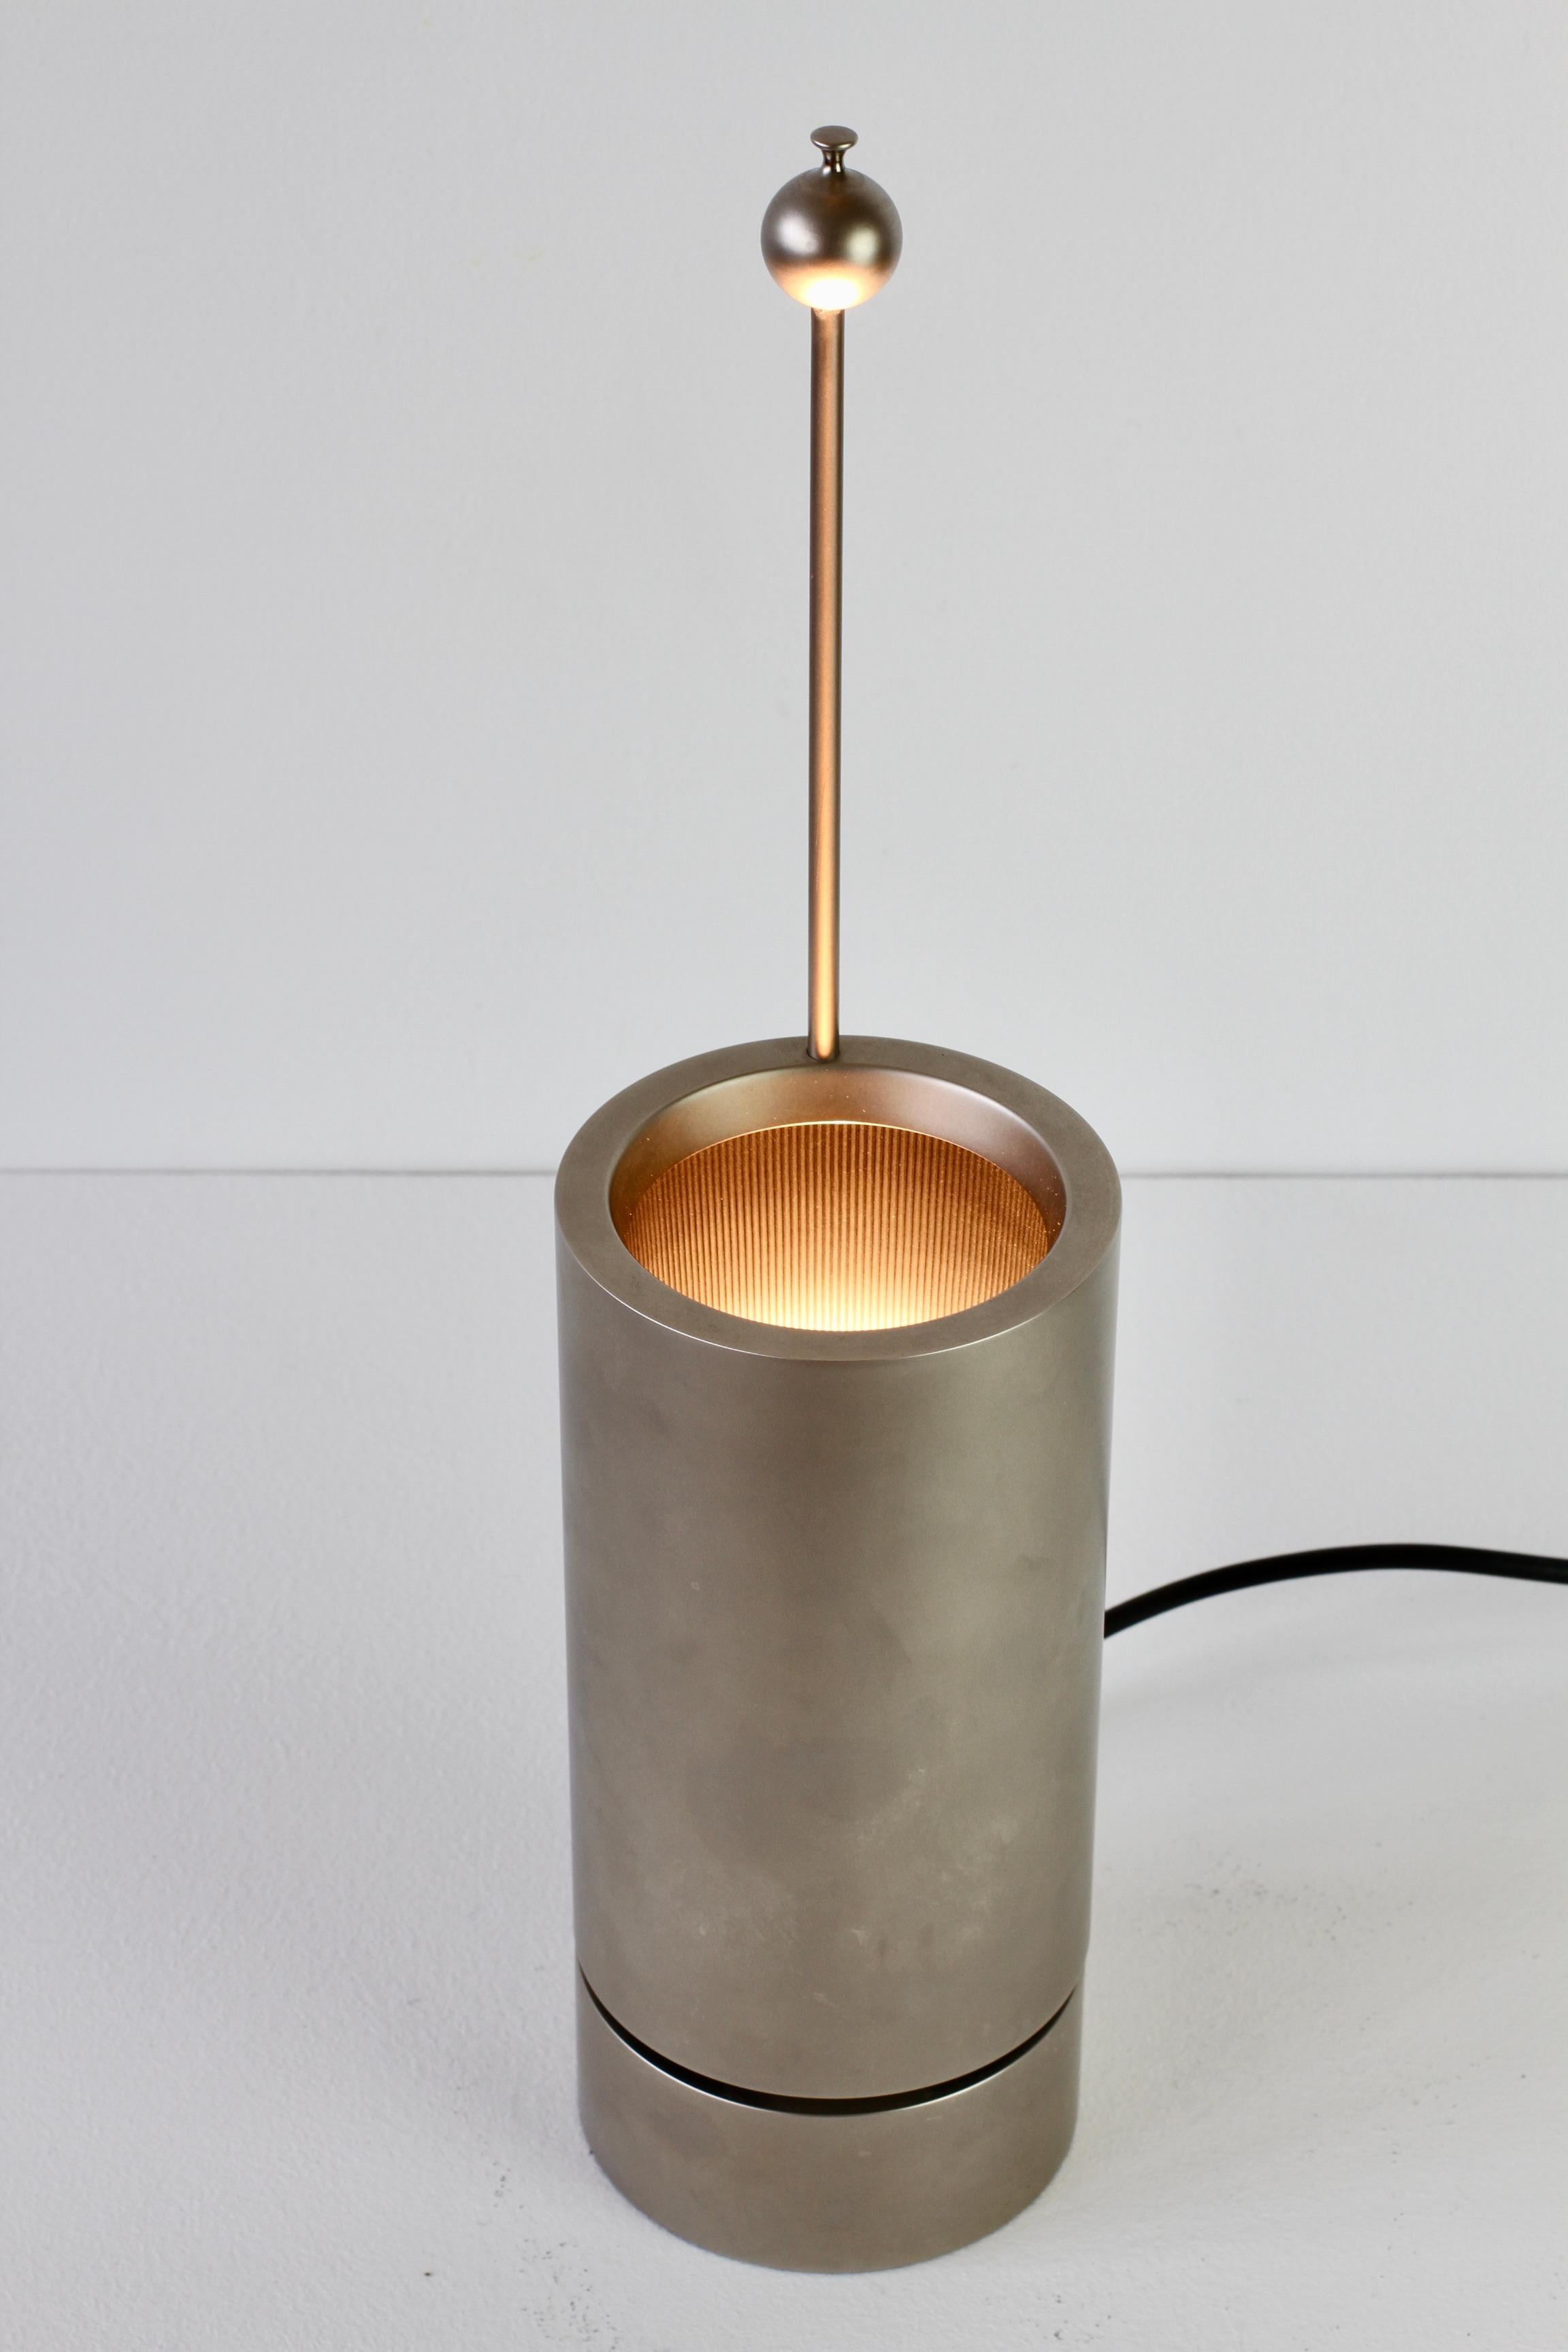 Florian Schulz Rare 'TOS' Vintage Modernist Brushed Satin Nickel Table Lamp For Sale 10